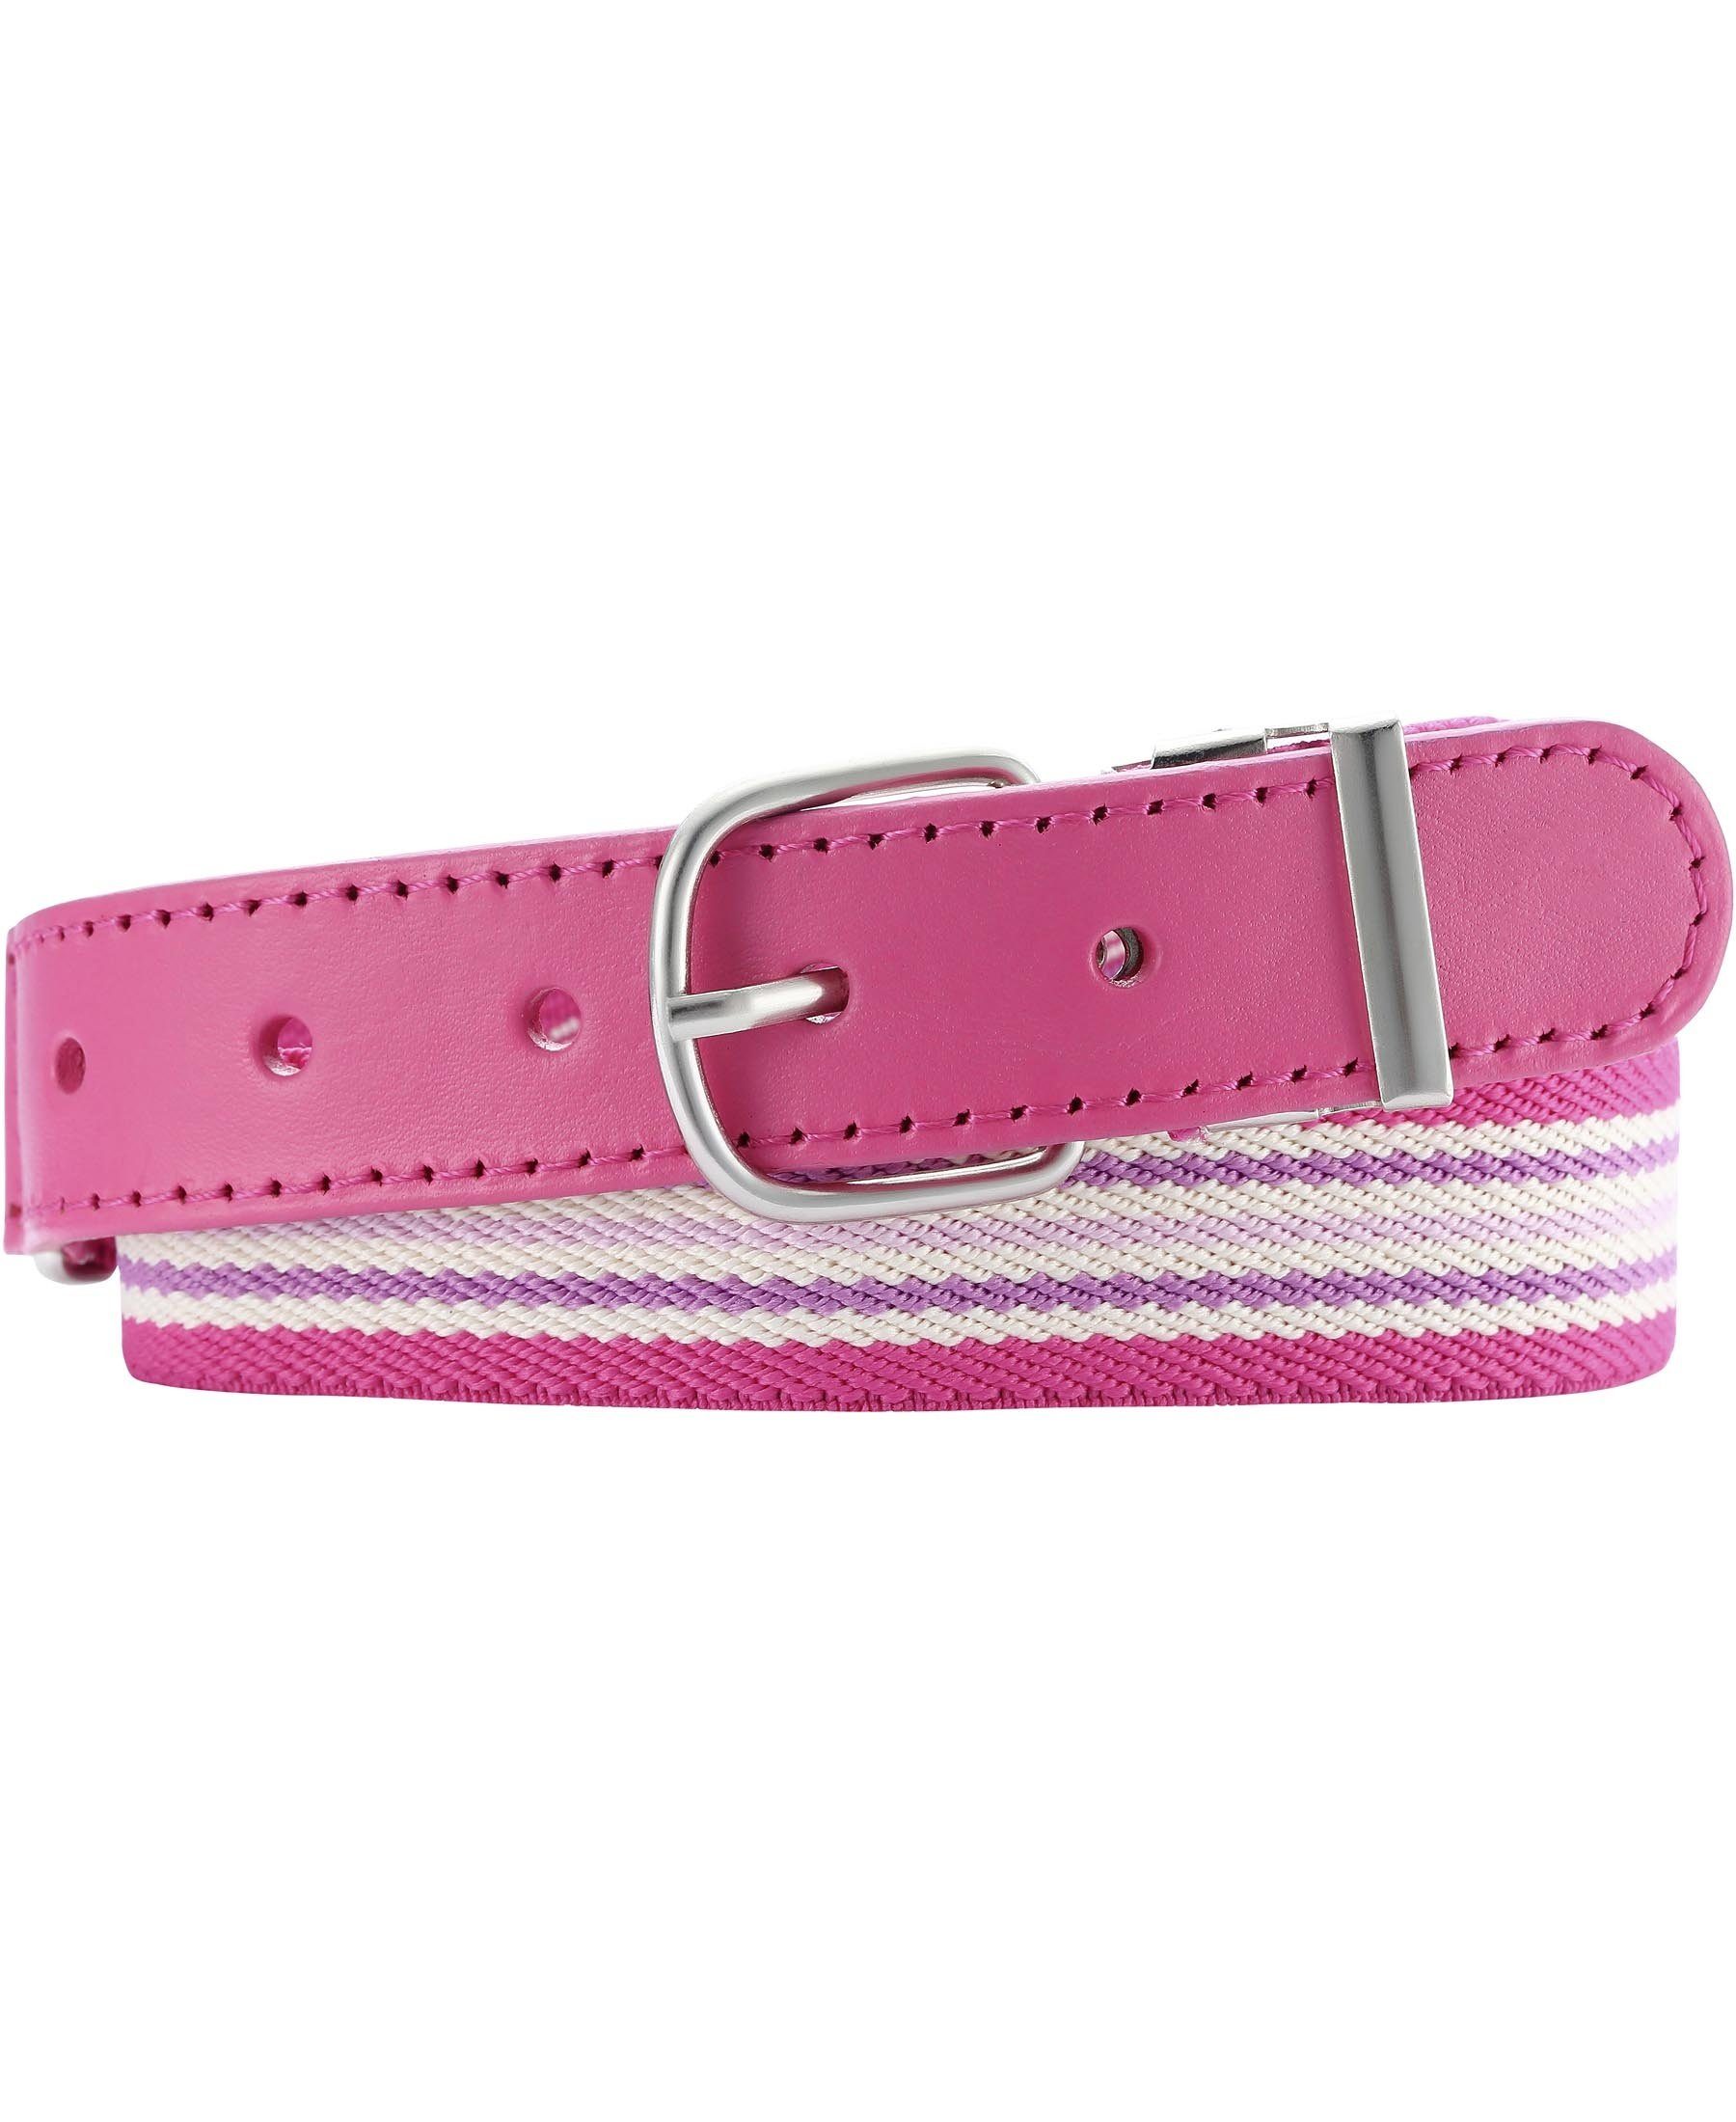 Playshoes Ringel Taillengürtel Elastik-Gürtel pink